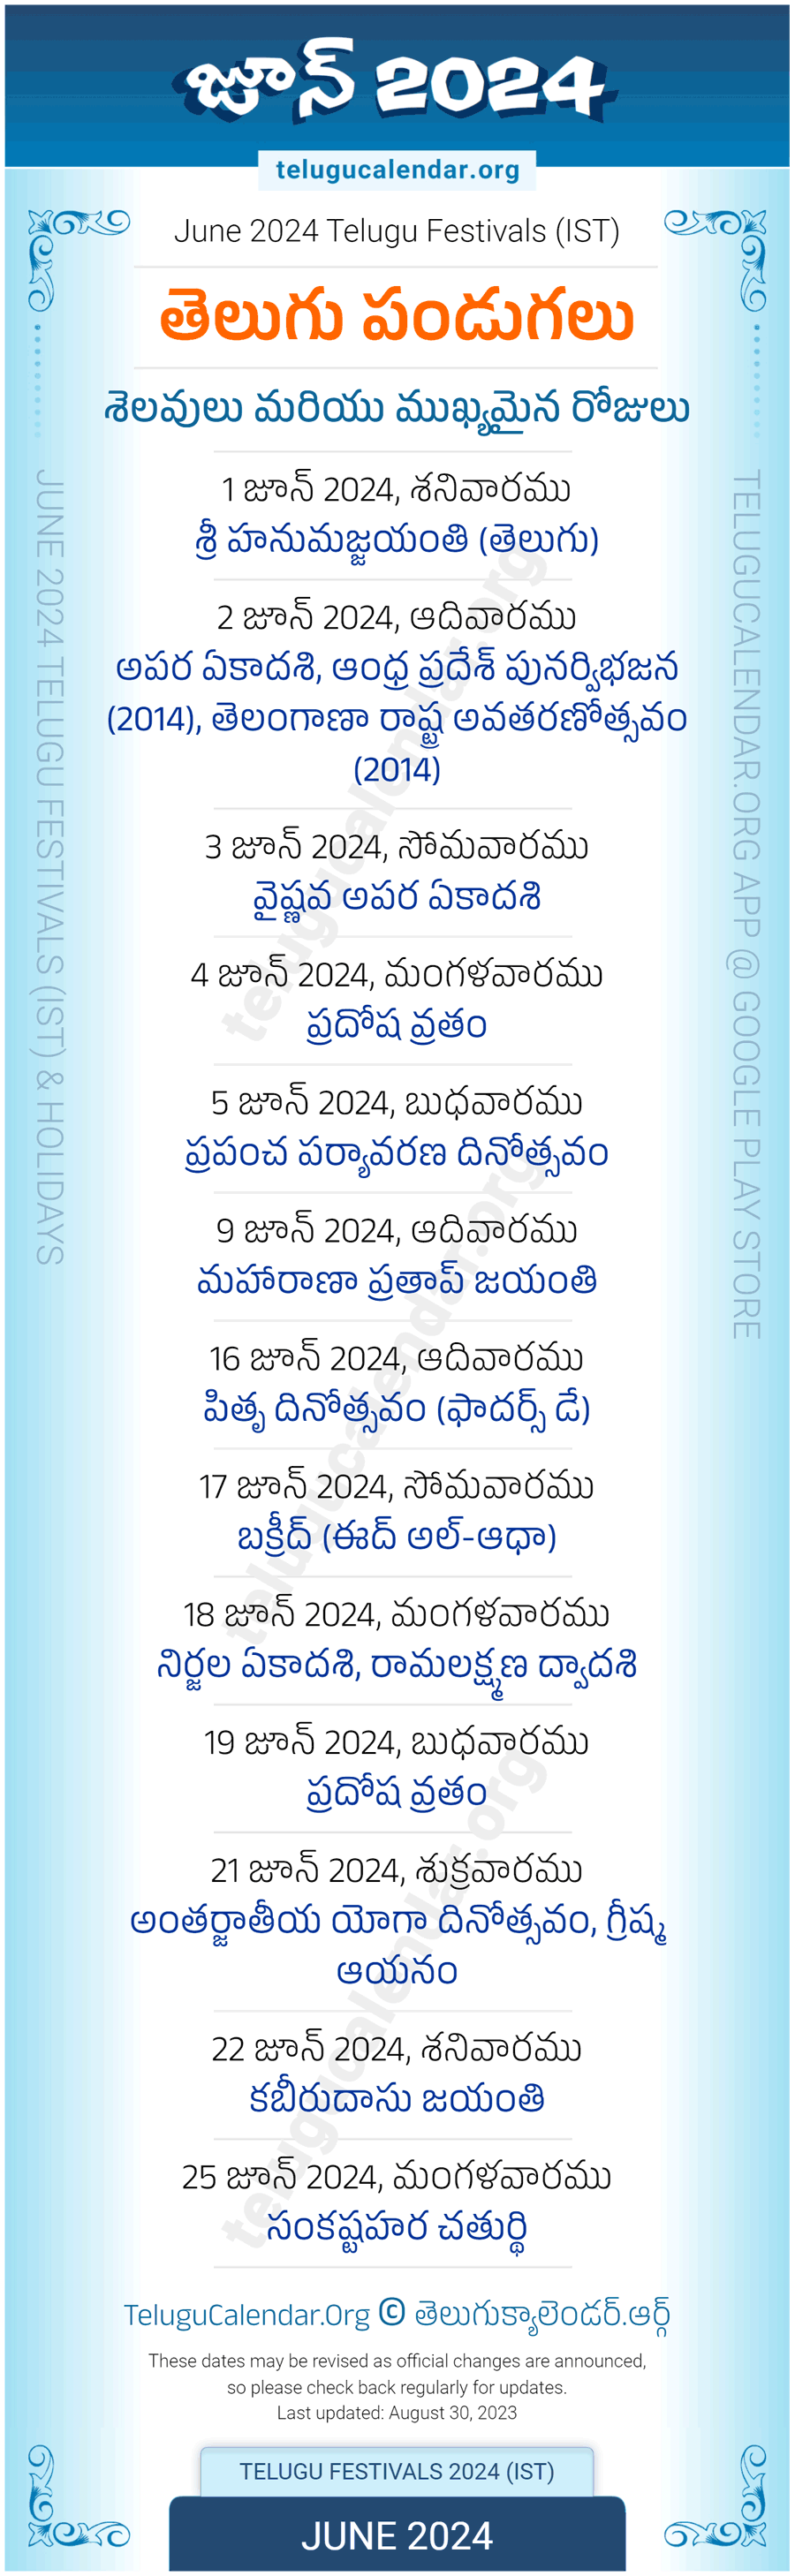 Telugu Festivals 2024 June Pdf Download pertaining to Telugu Calendar 2024 June